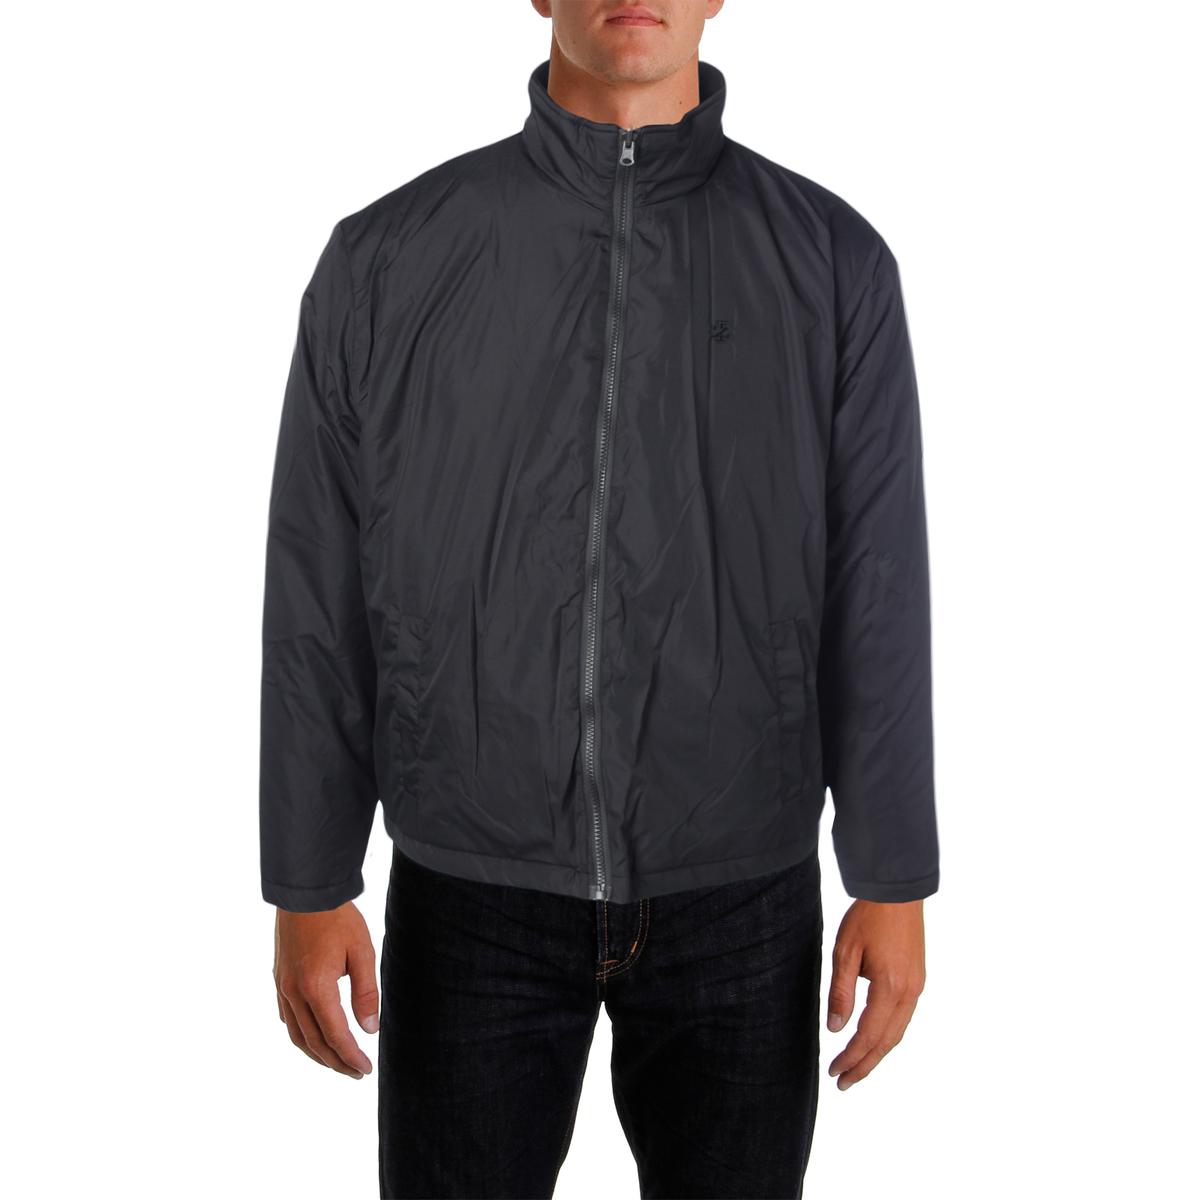 Izod 0163 Mens Systems 3-in-1 Coat Jacket Outerwear BHFO | eBay